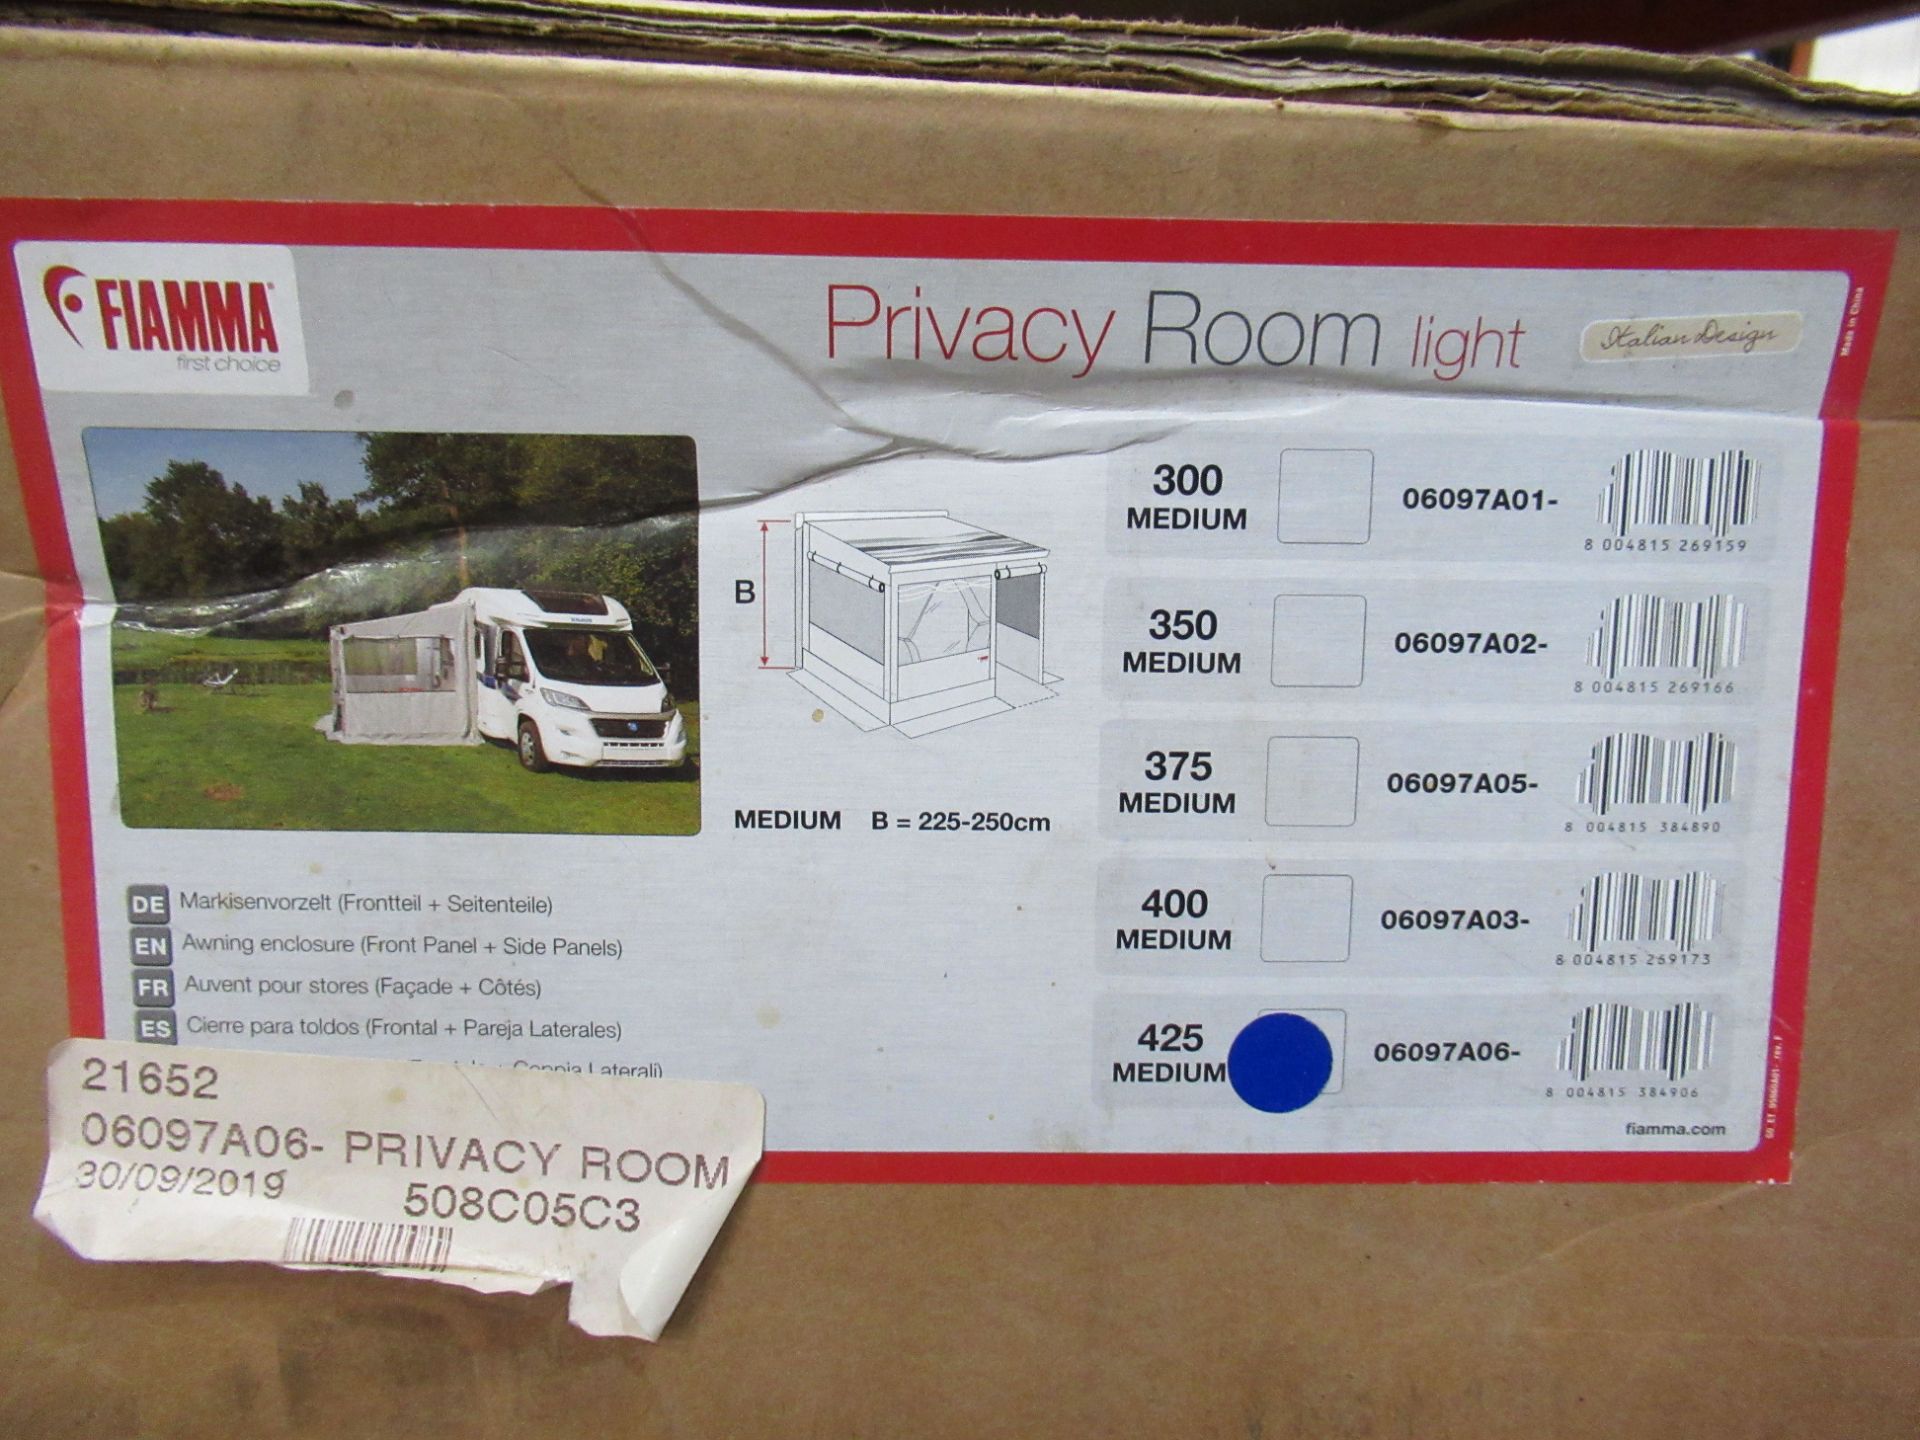 FIAMMA Privacy Room Light - Image 2 of 2